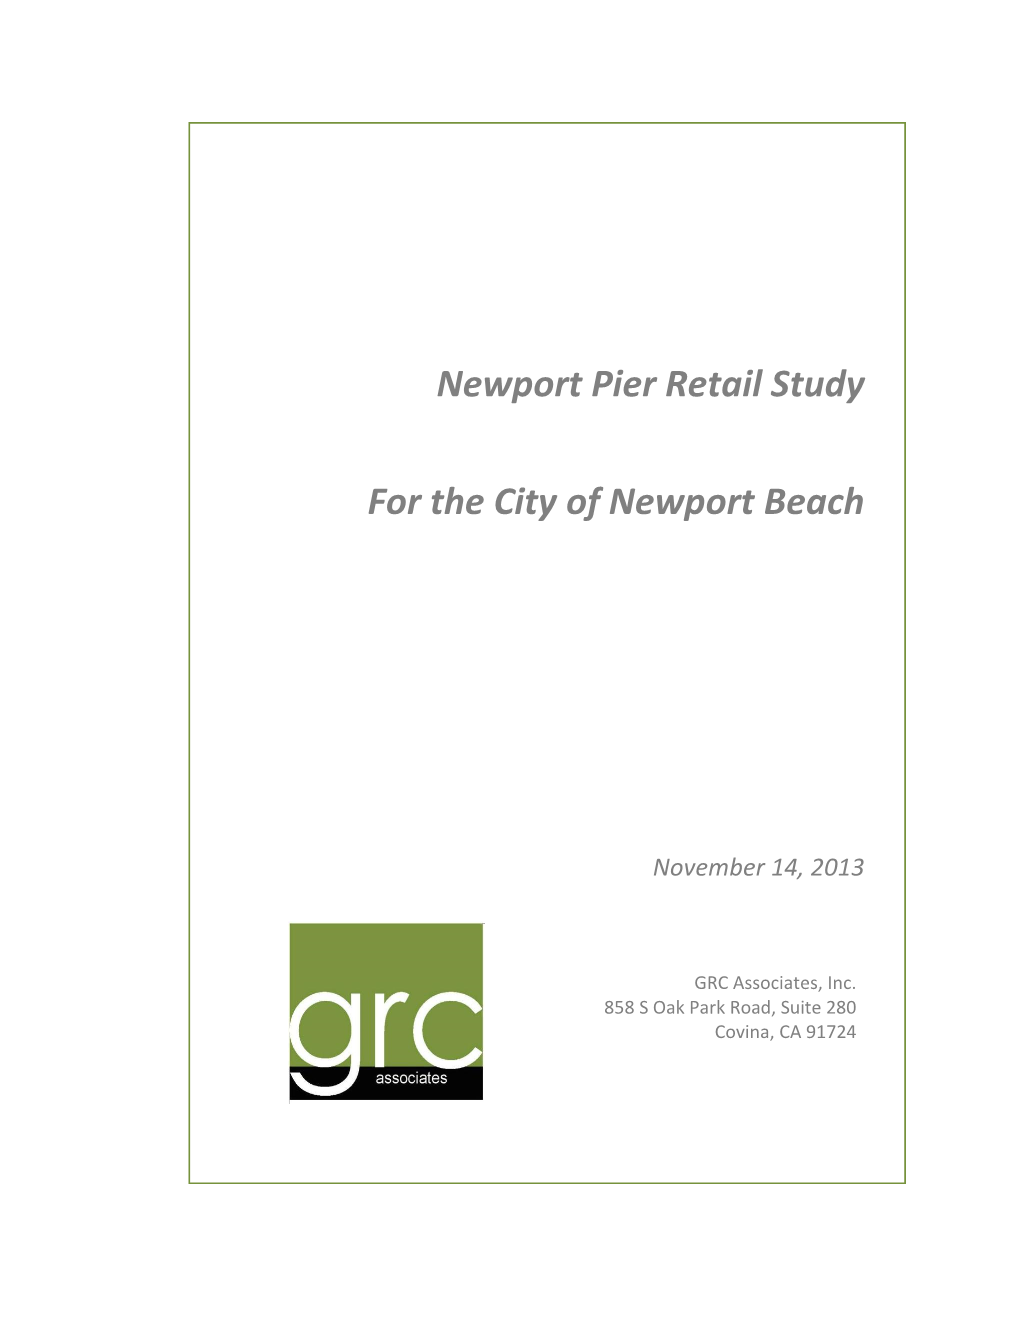 Newport Pier Retail Study for the City of Newport Beach